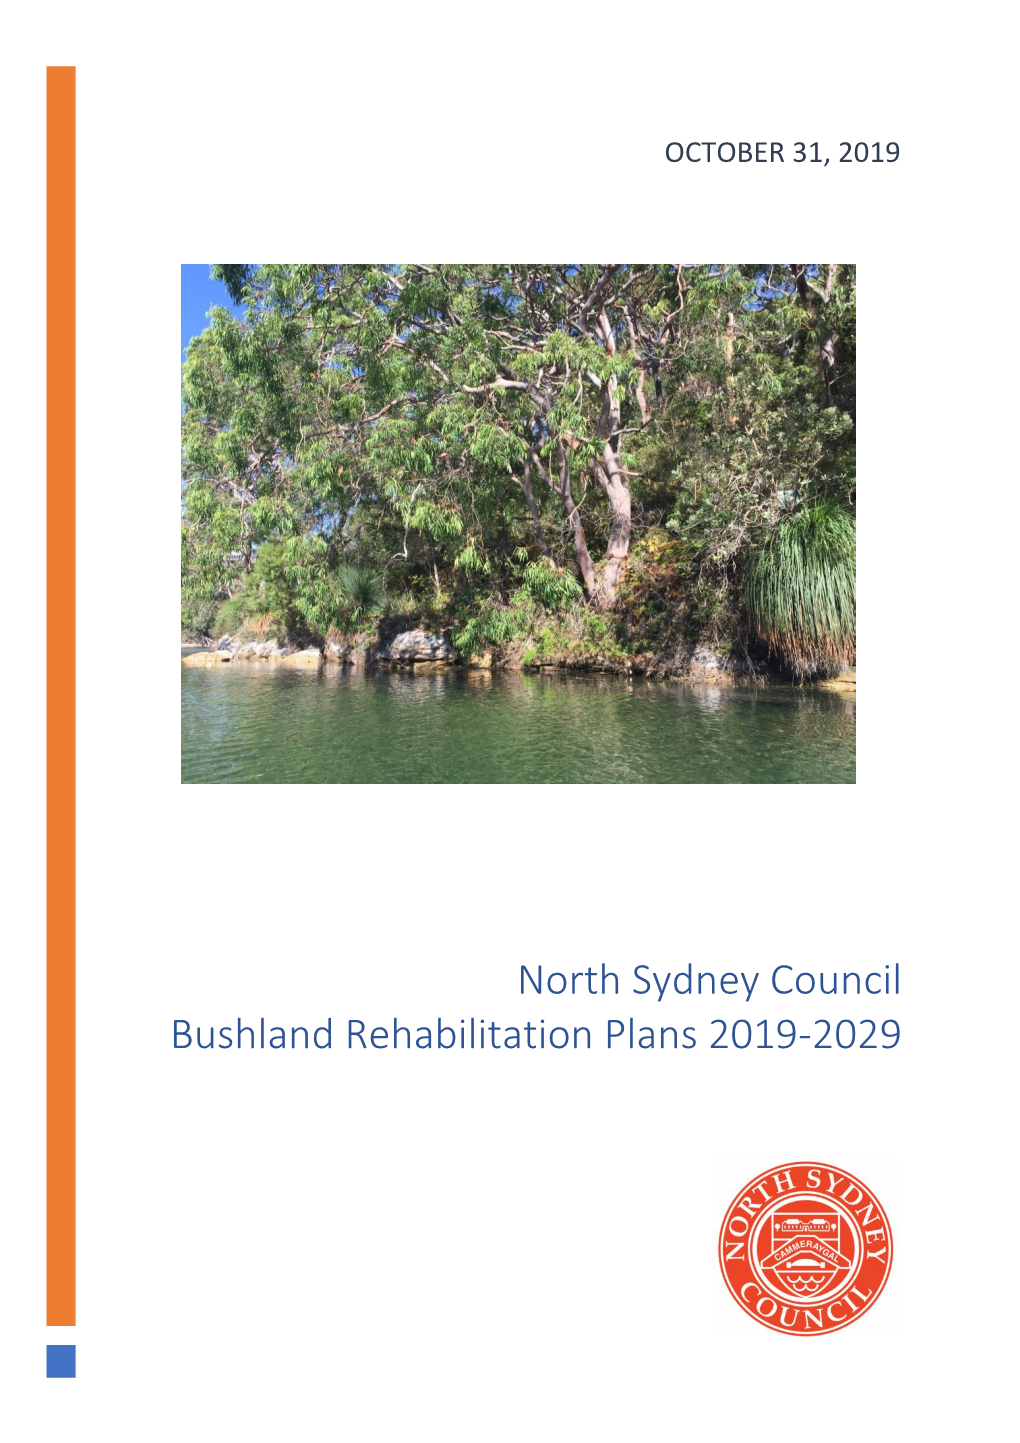 North Sydney Council Bushland Rehabilitation Plans 2019-2029